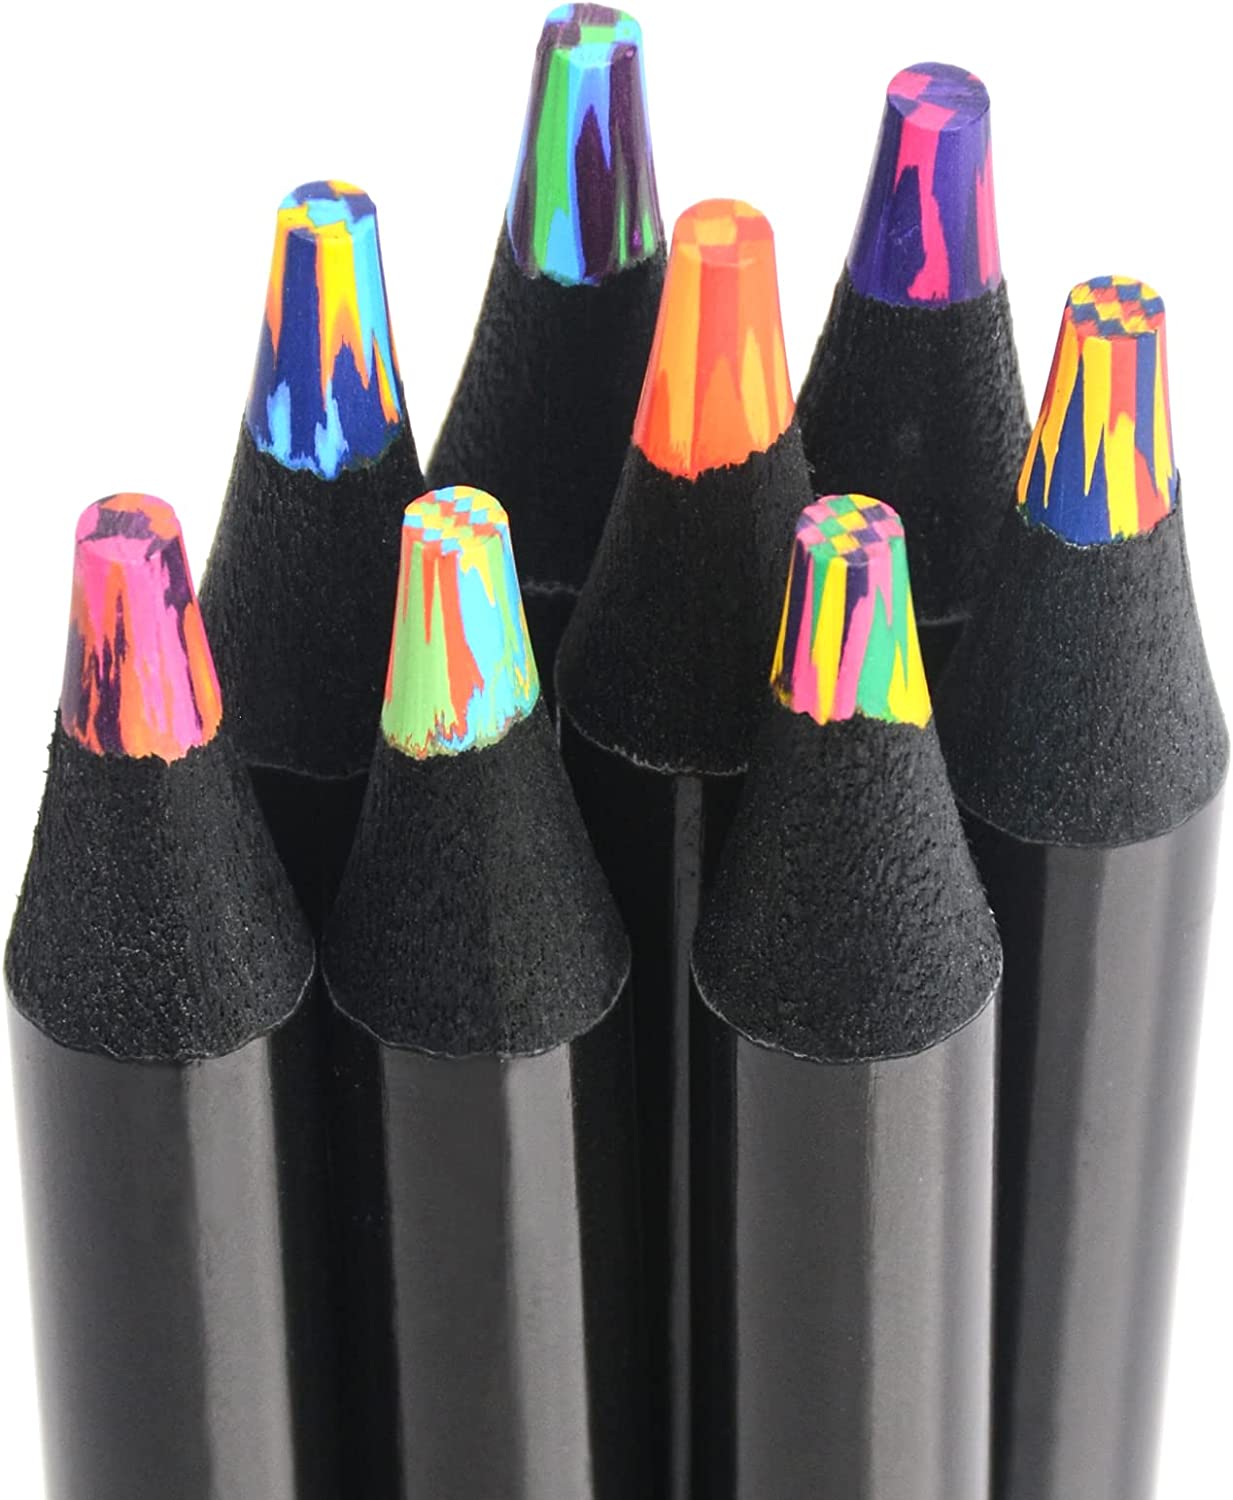 nsxsu 8 Colors Rainbow Pencils, Jumbo Colored Pencils [...]